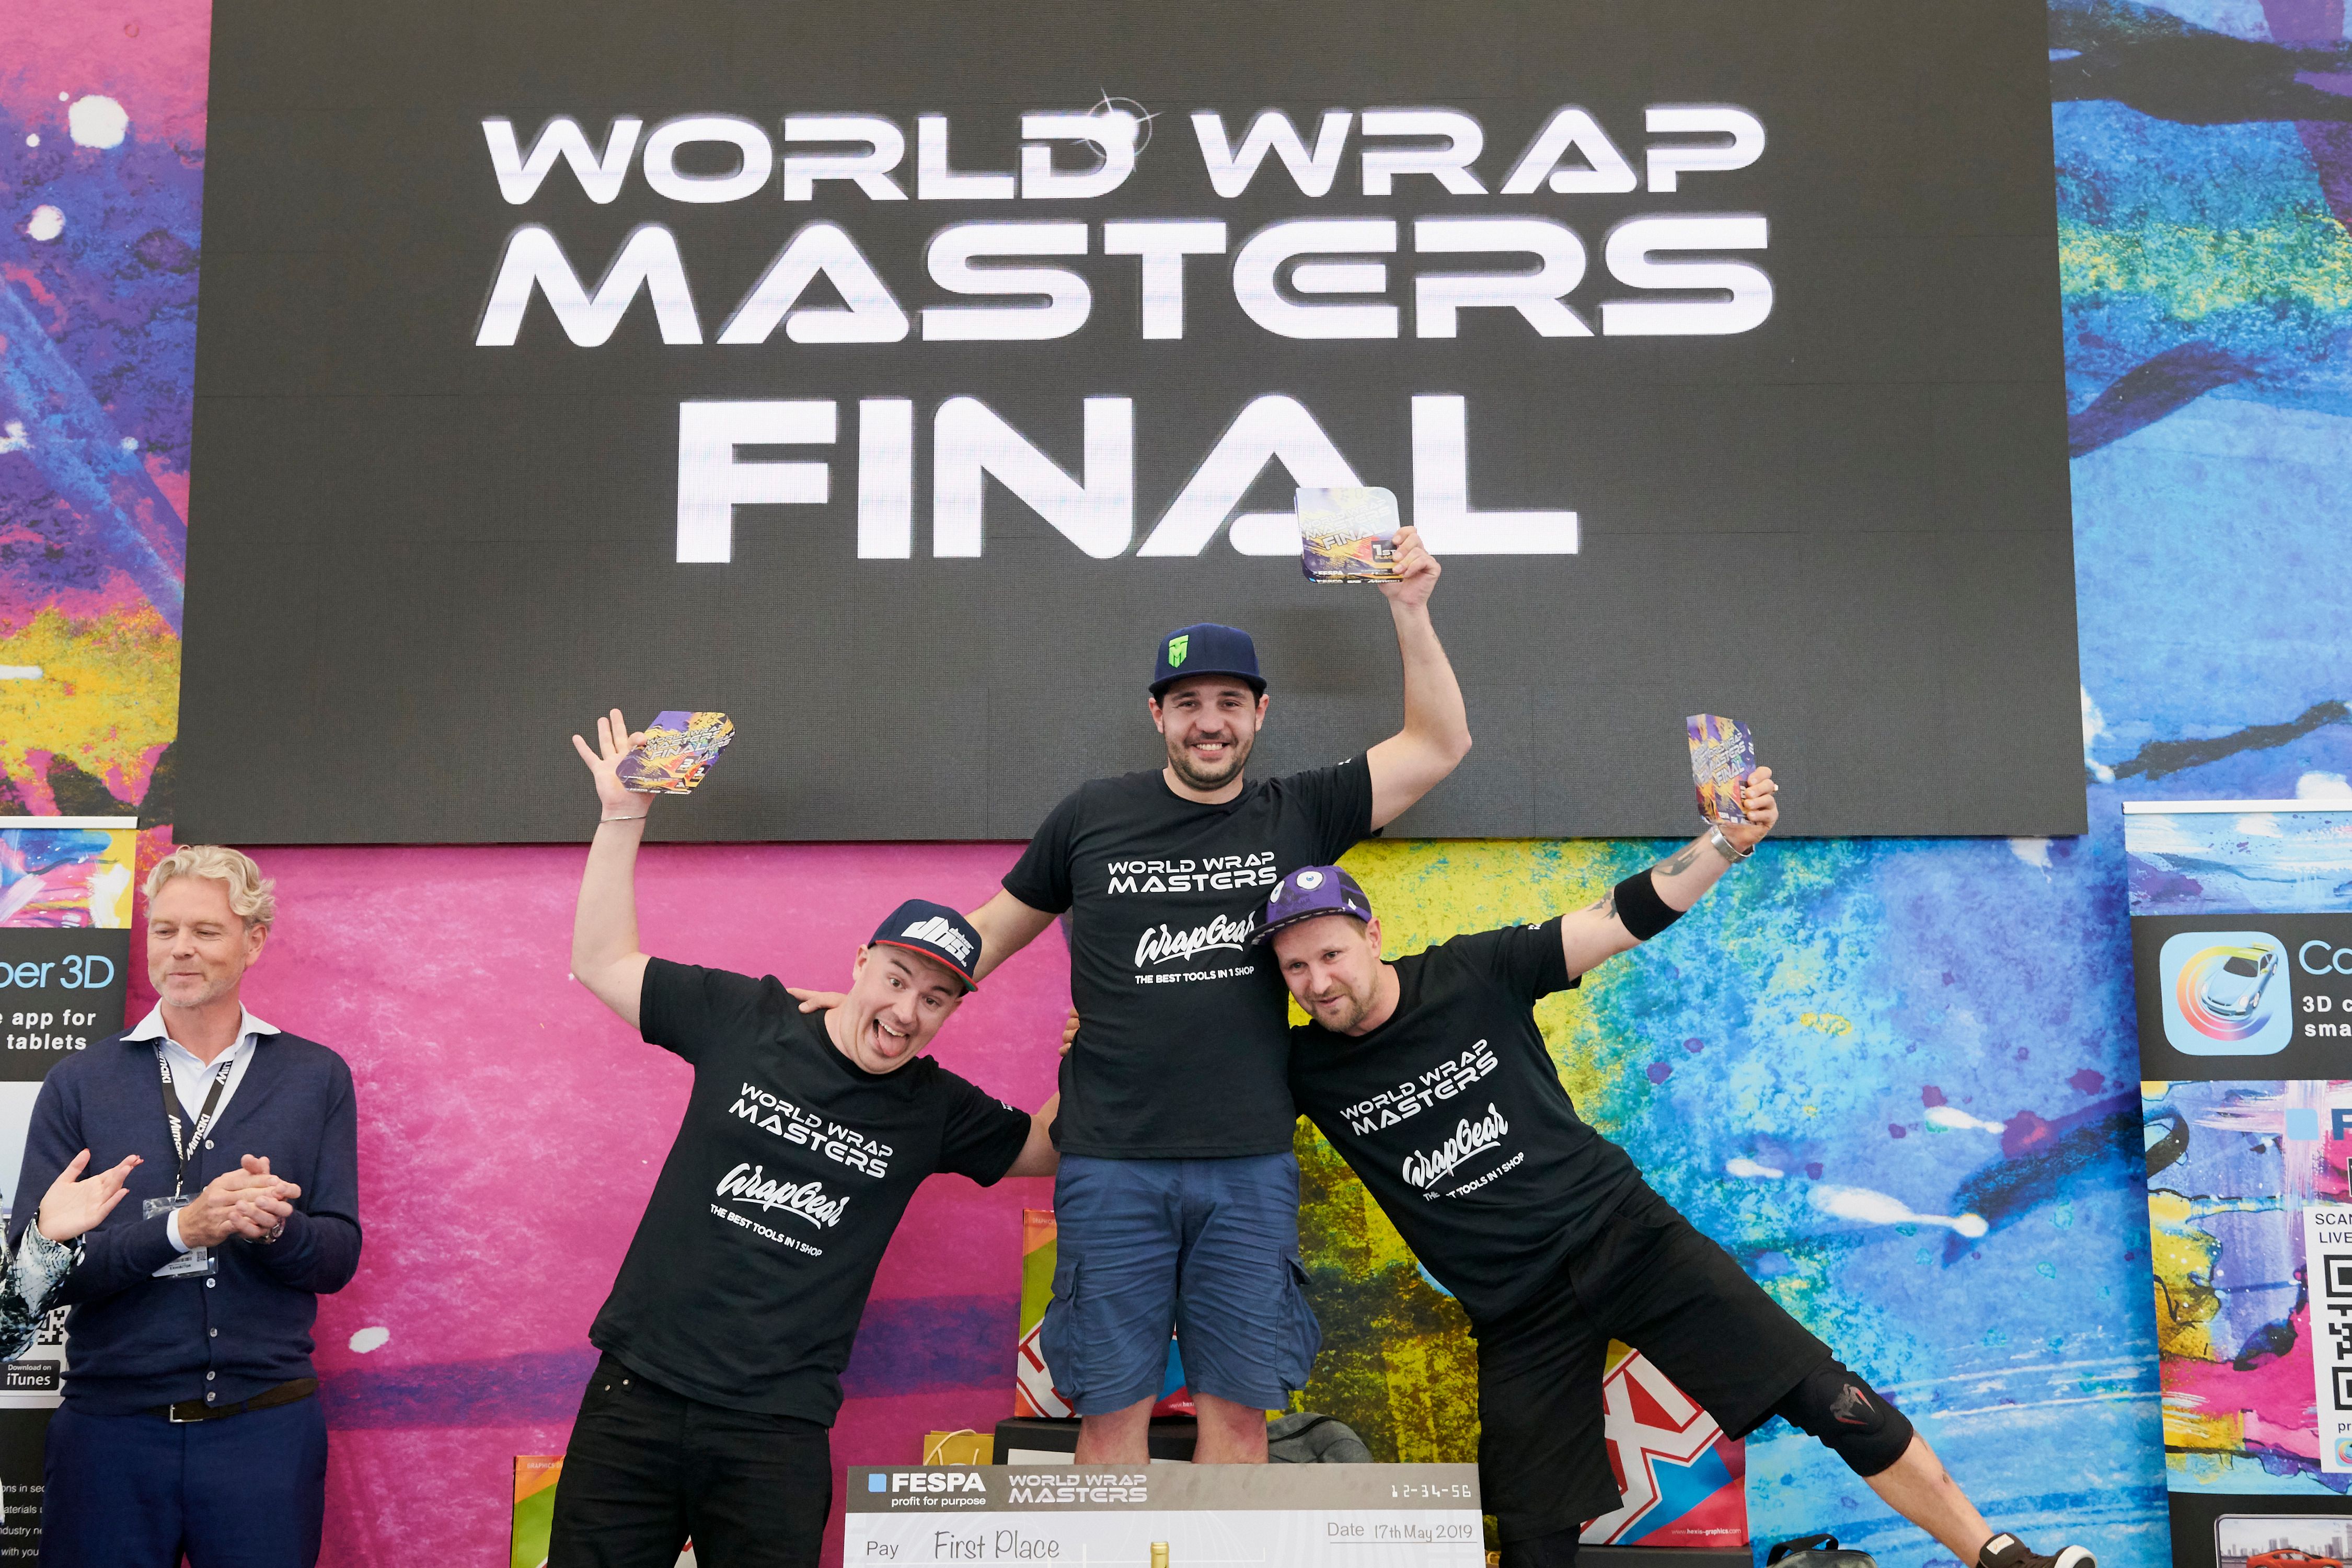 World Wrap Masters Final